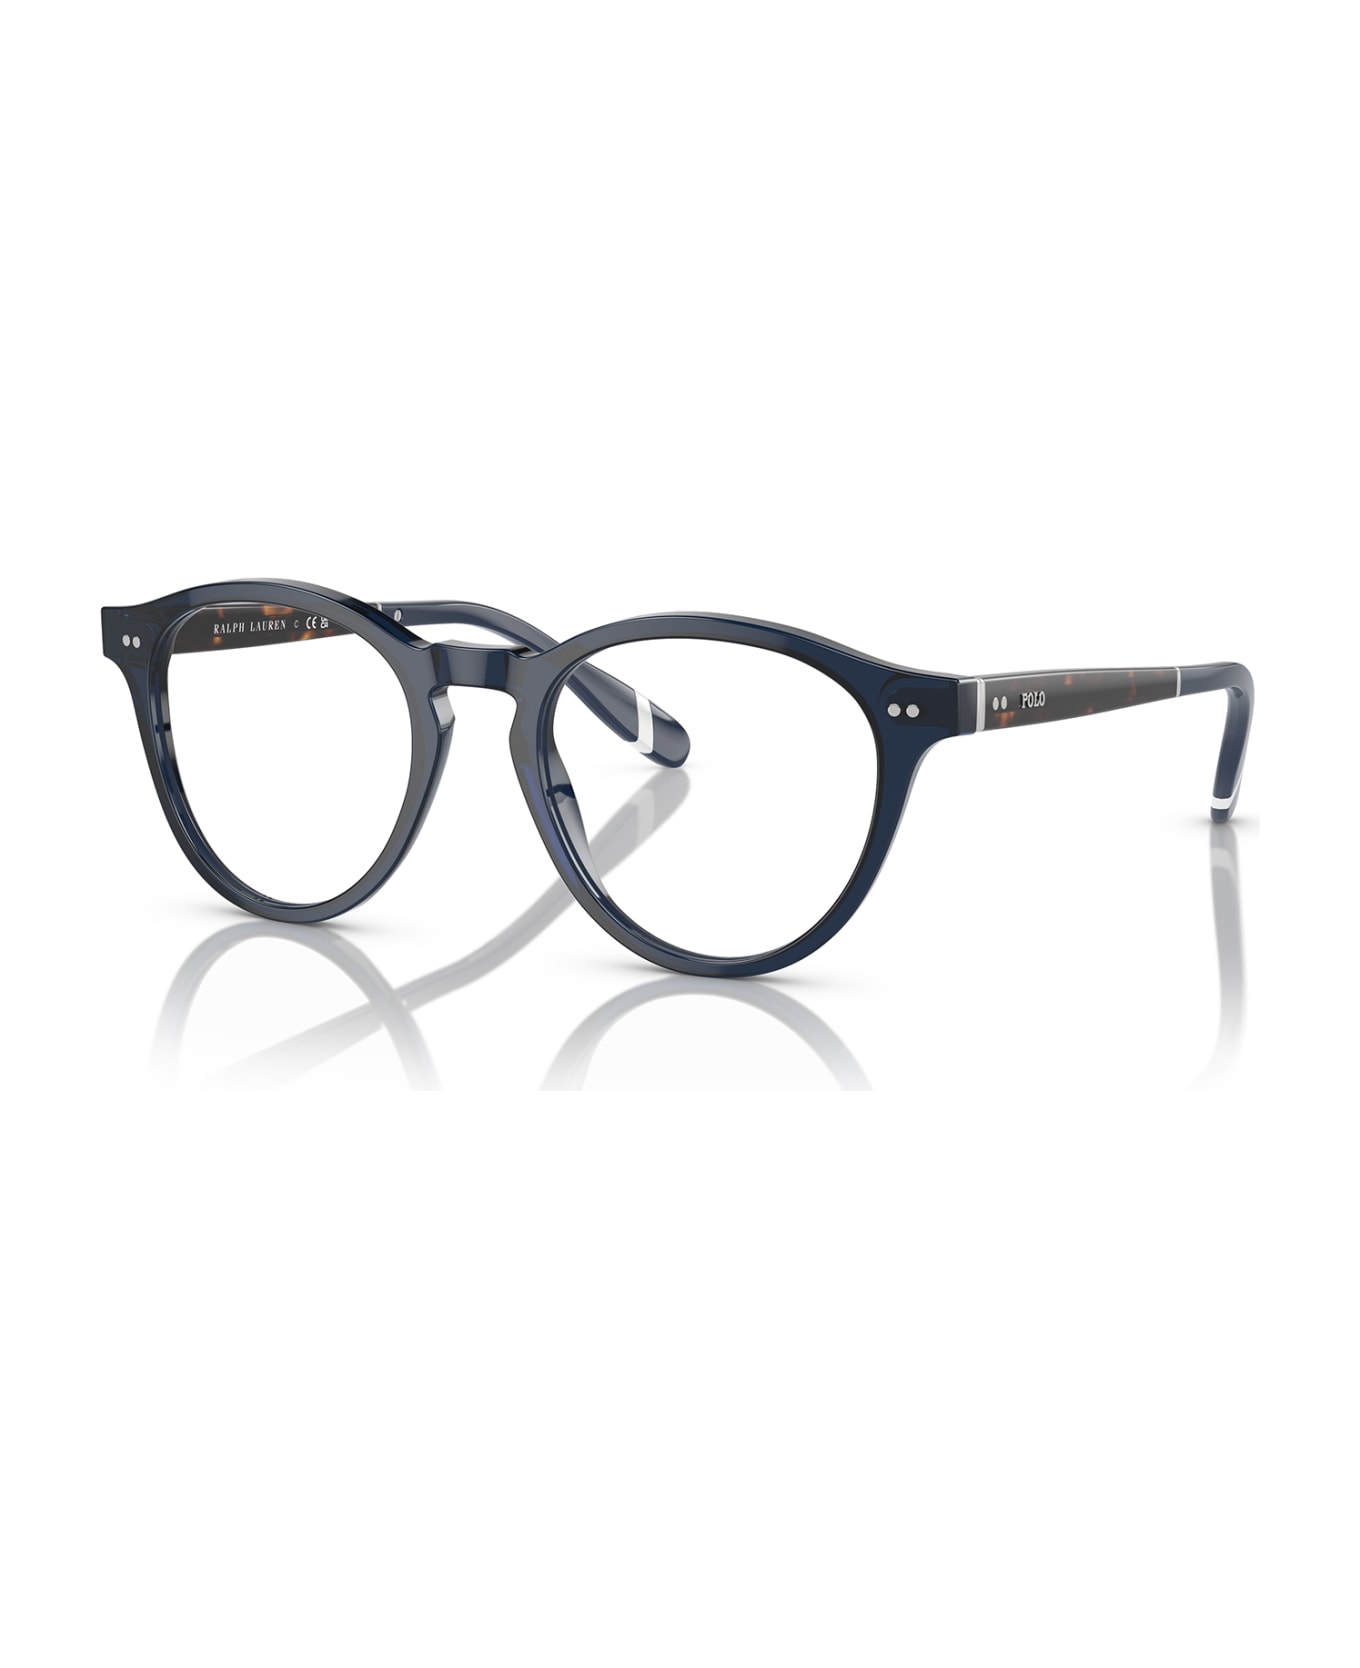 Polo Ralph Lauren Ph2268 Shiny Transparent Blue Glasses - Shiny Transparent Blue